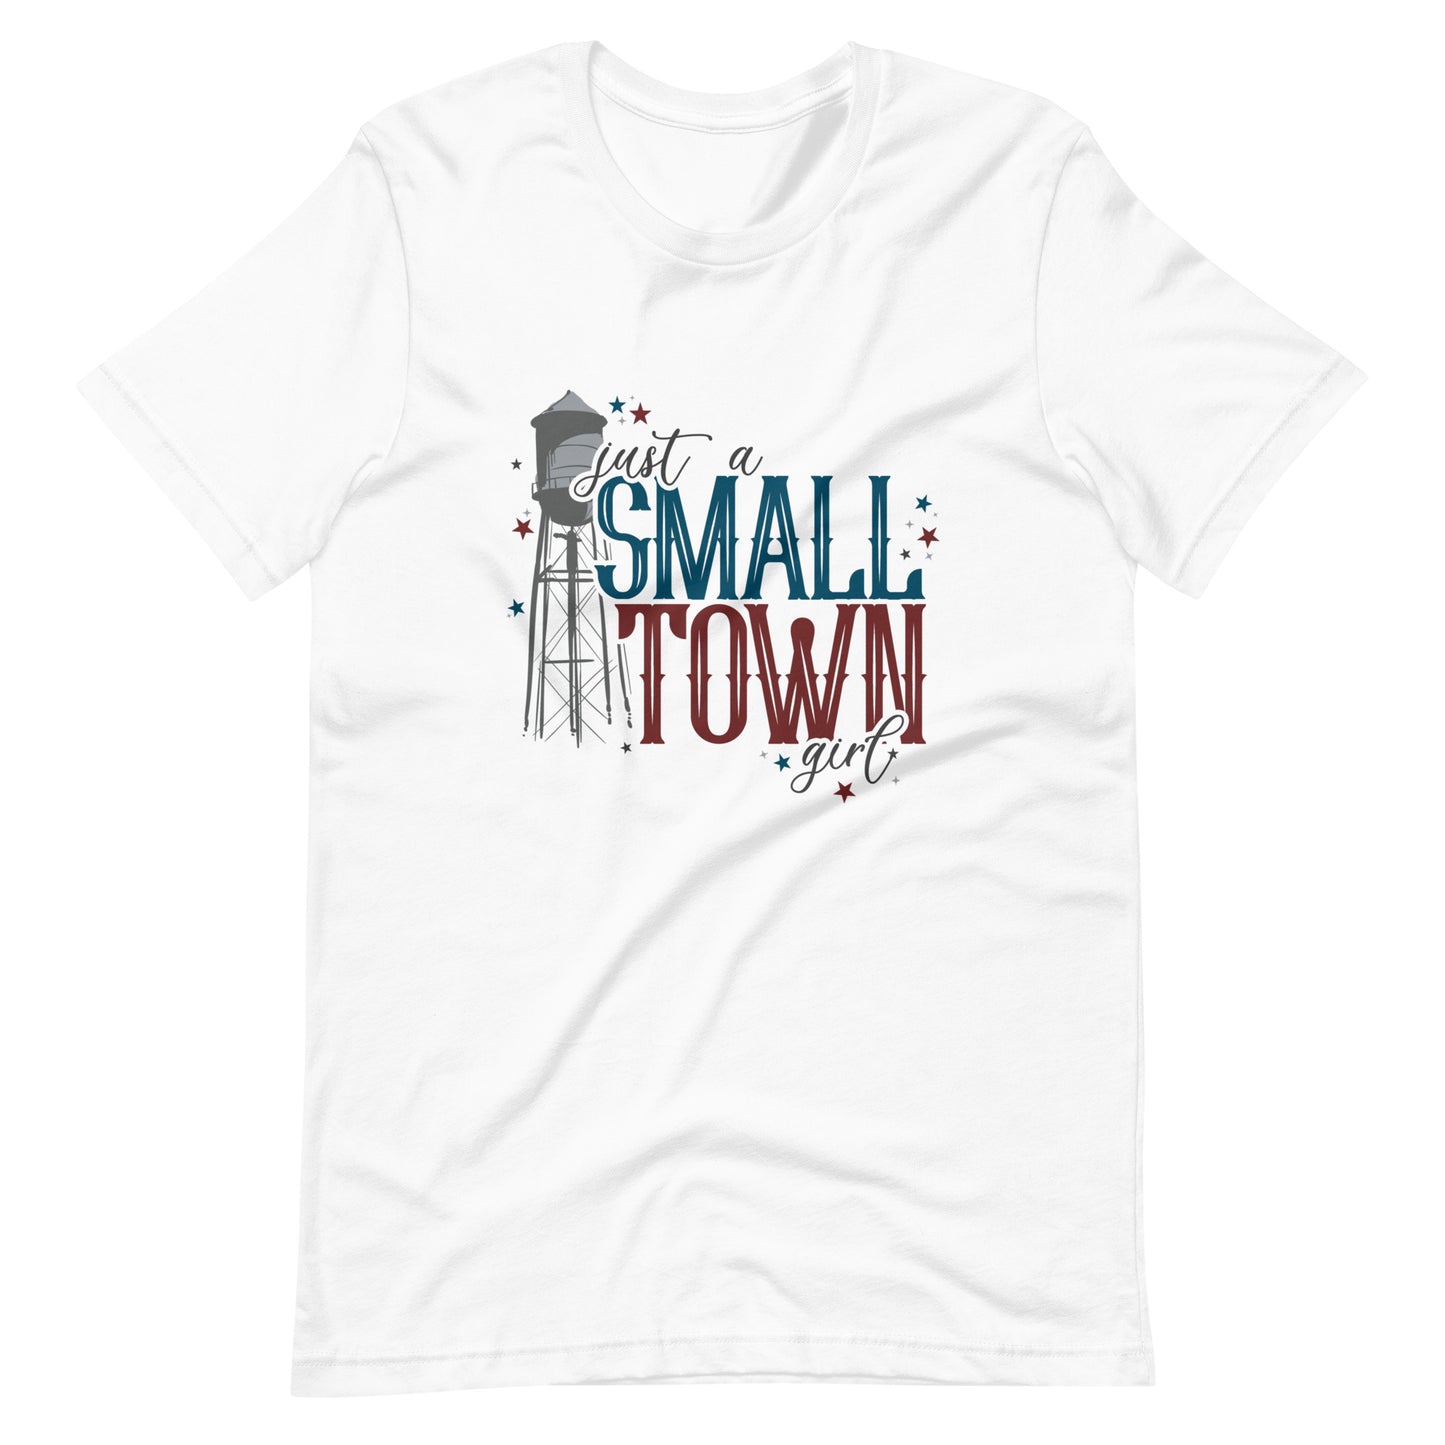 Small Town Girl Tee